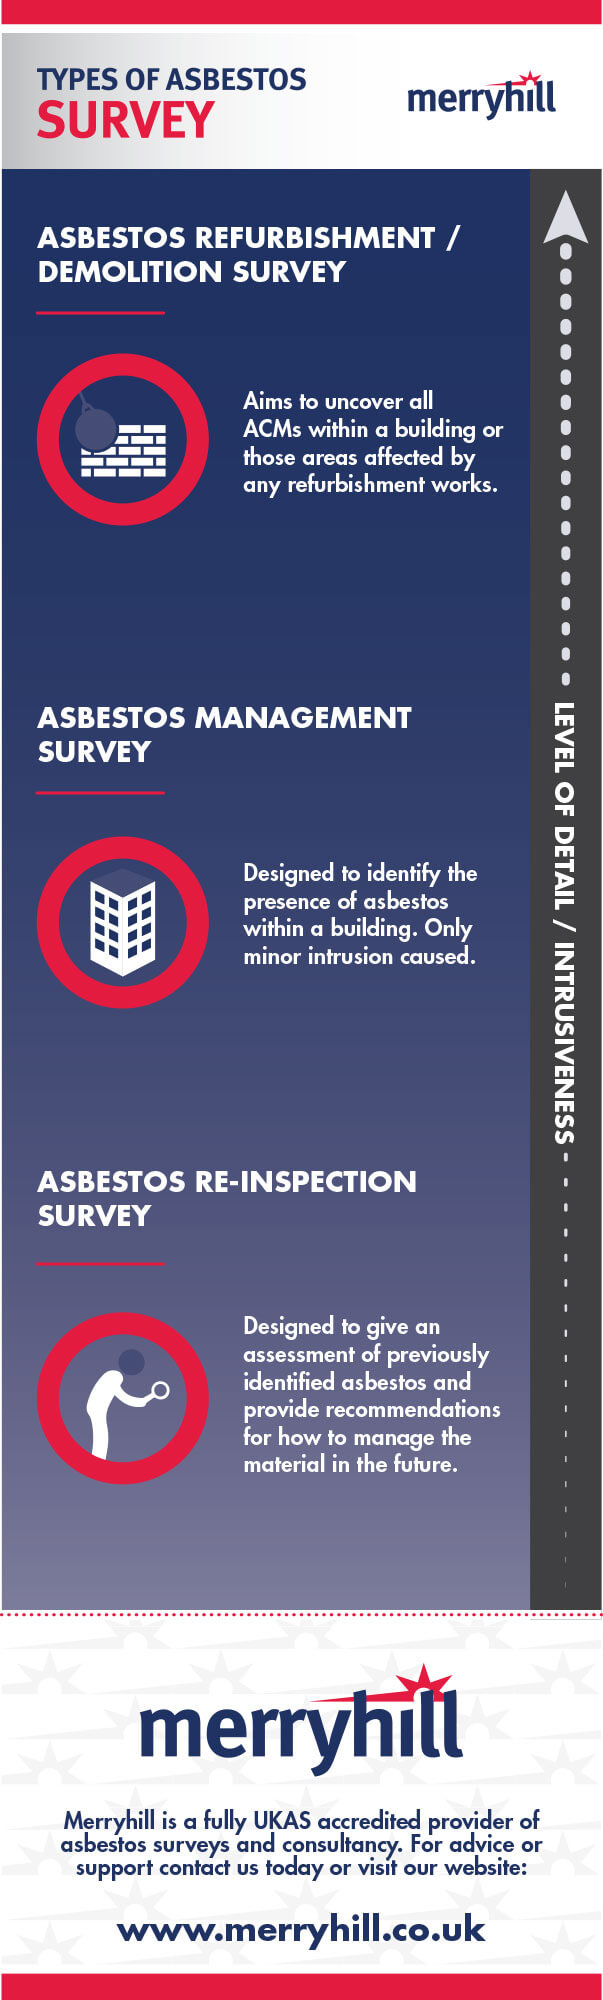 Types of Asbestos Survey Infographic